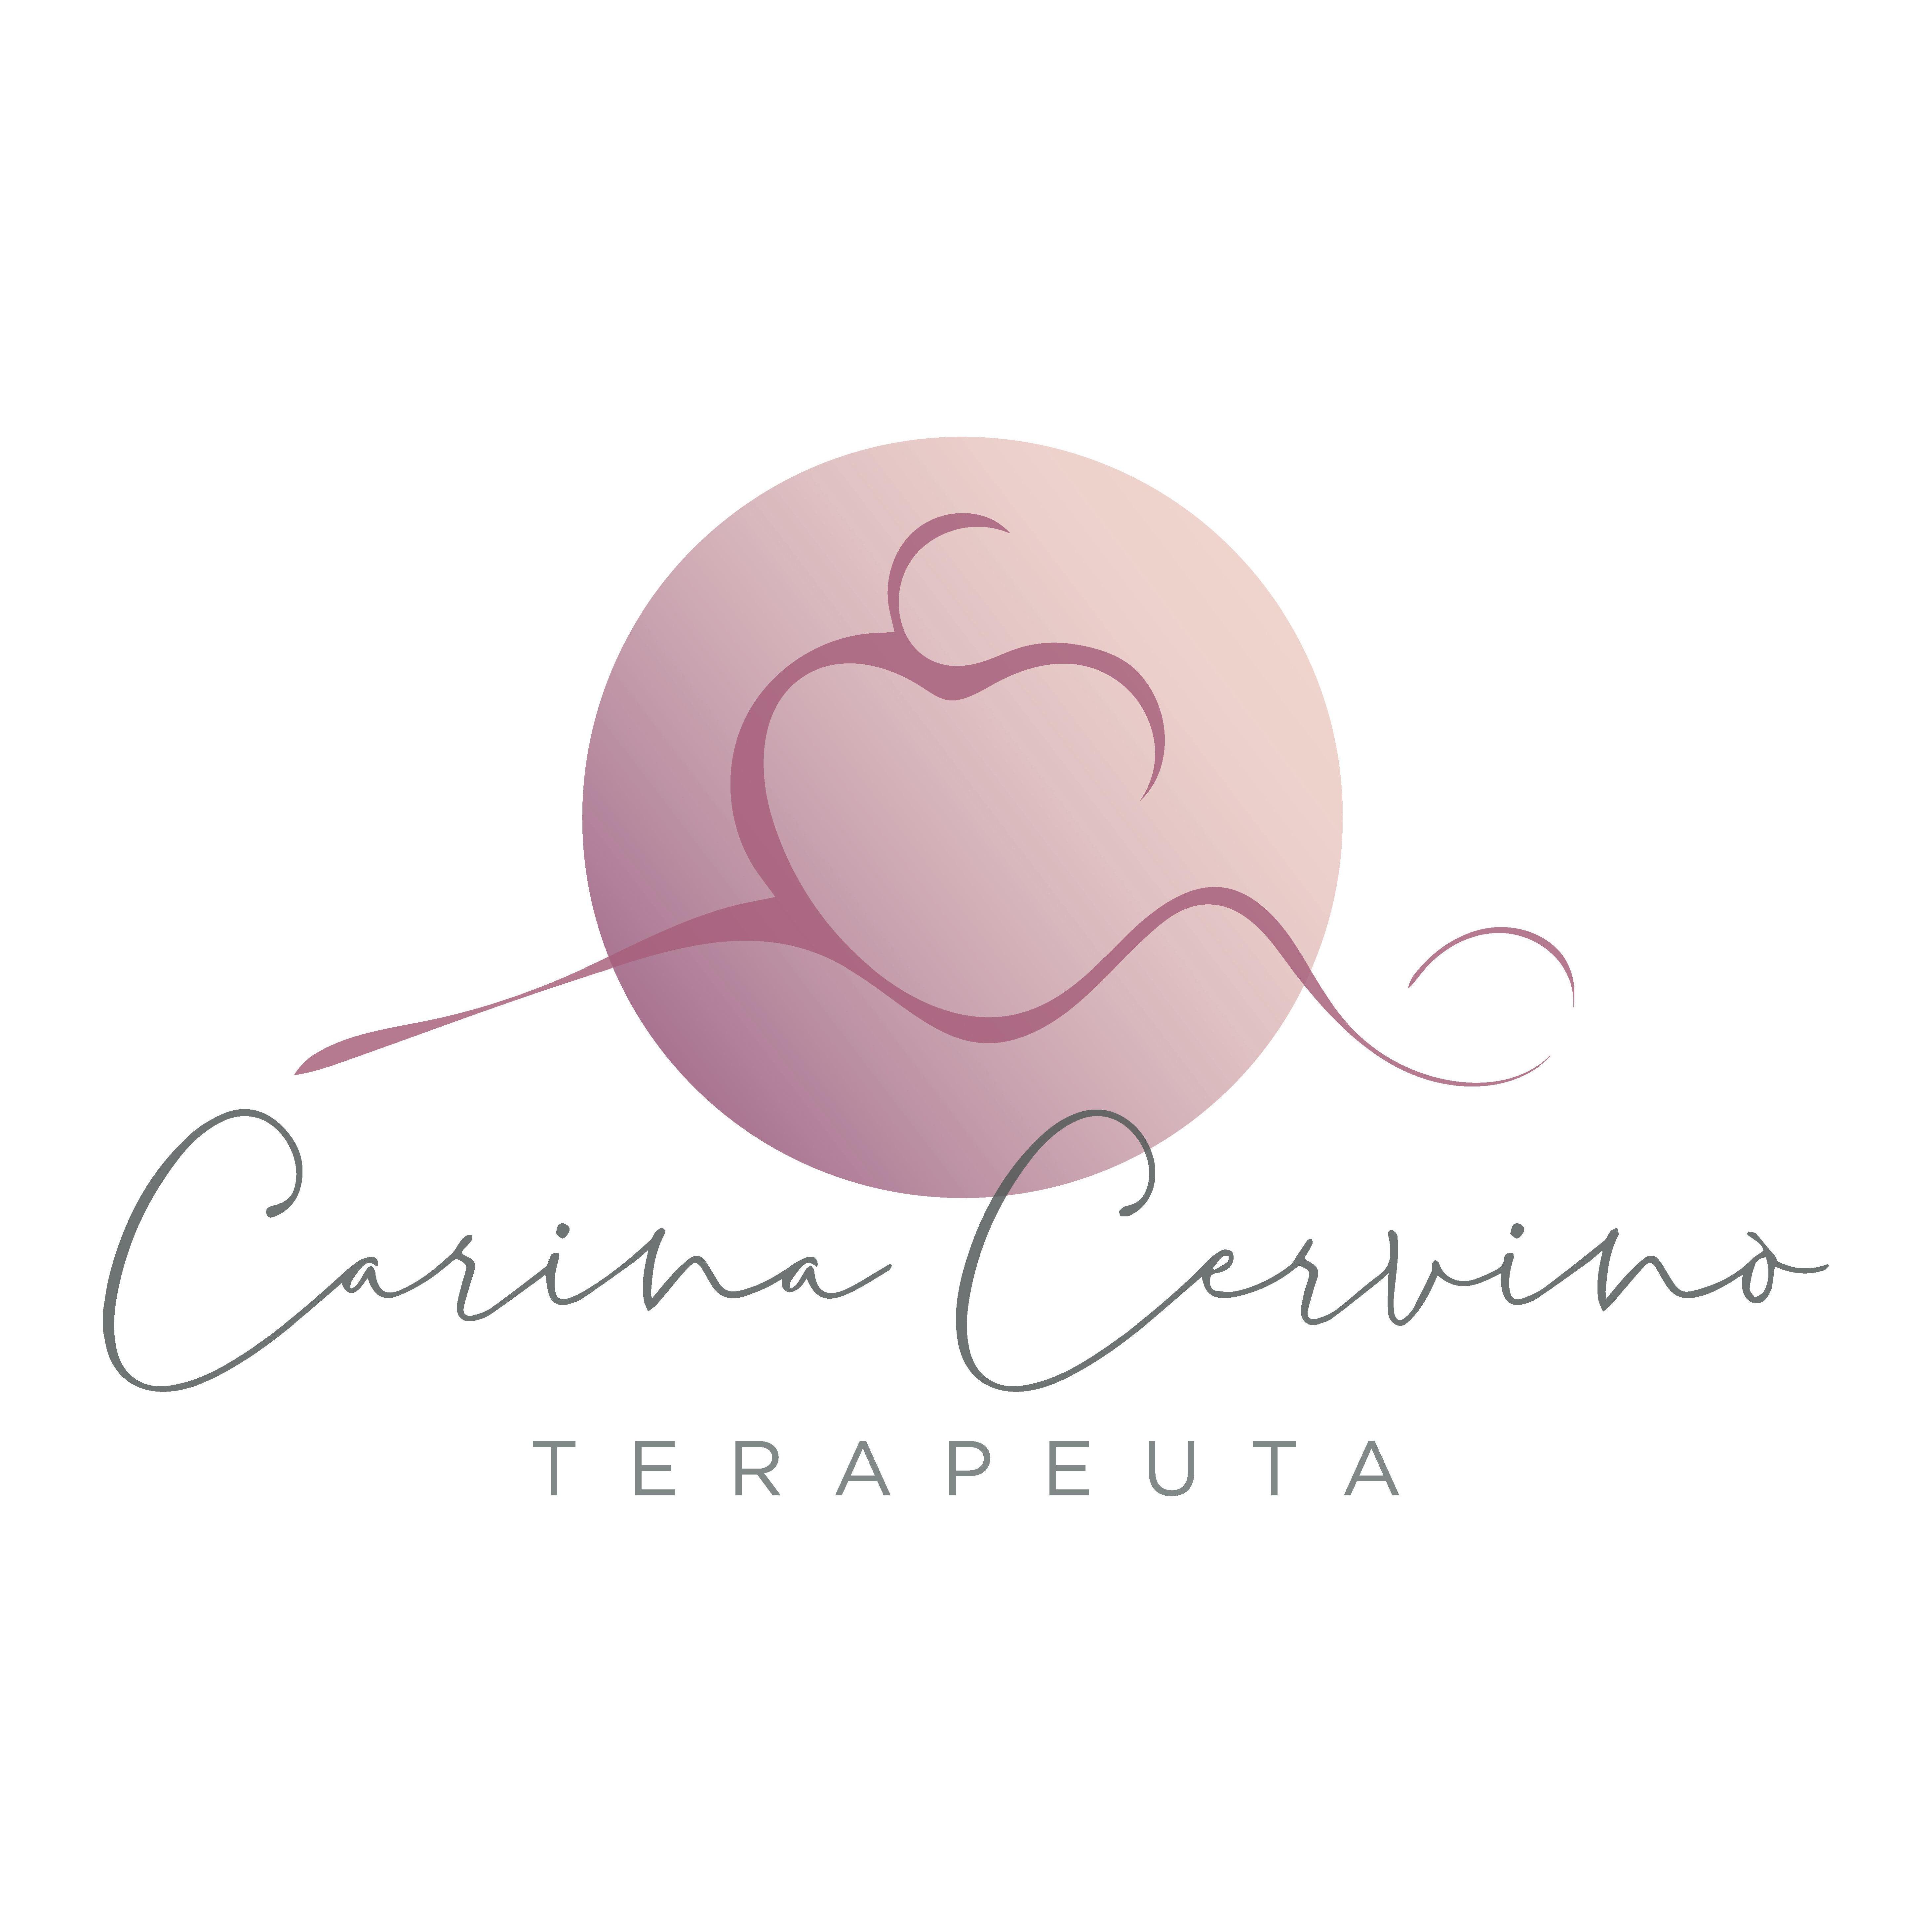 Carina Cervino - Terapeuta Gestalt Logo